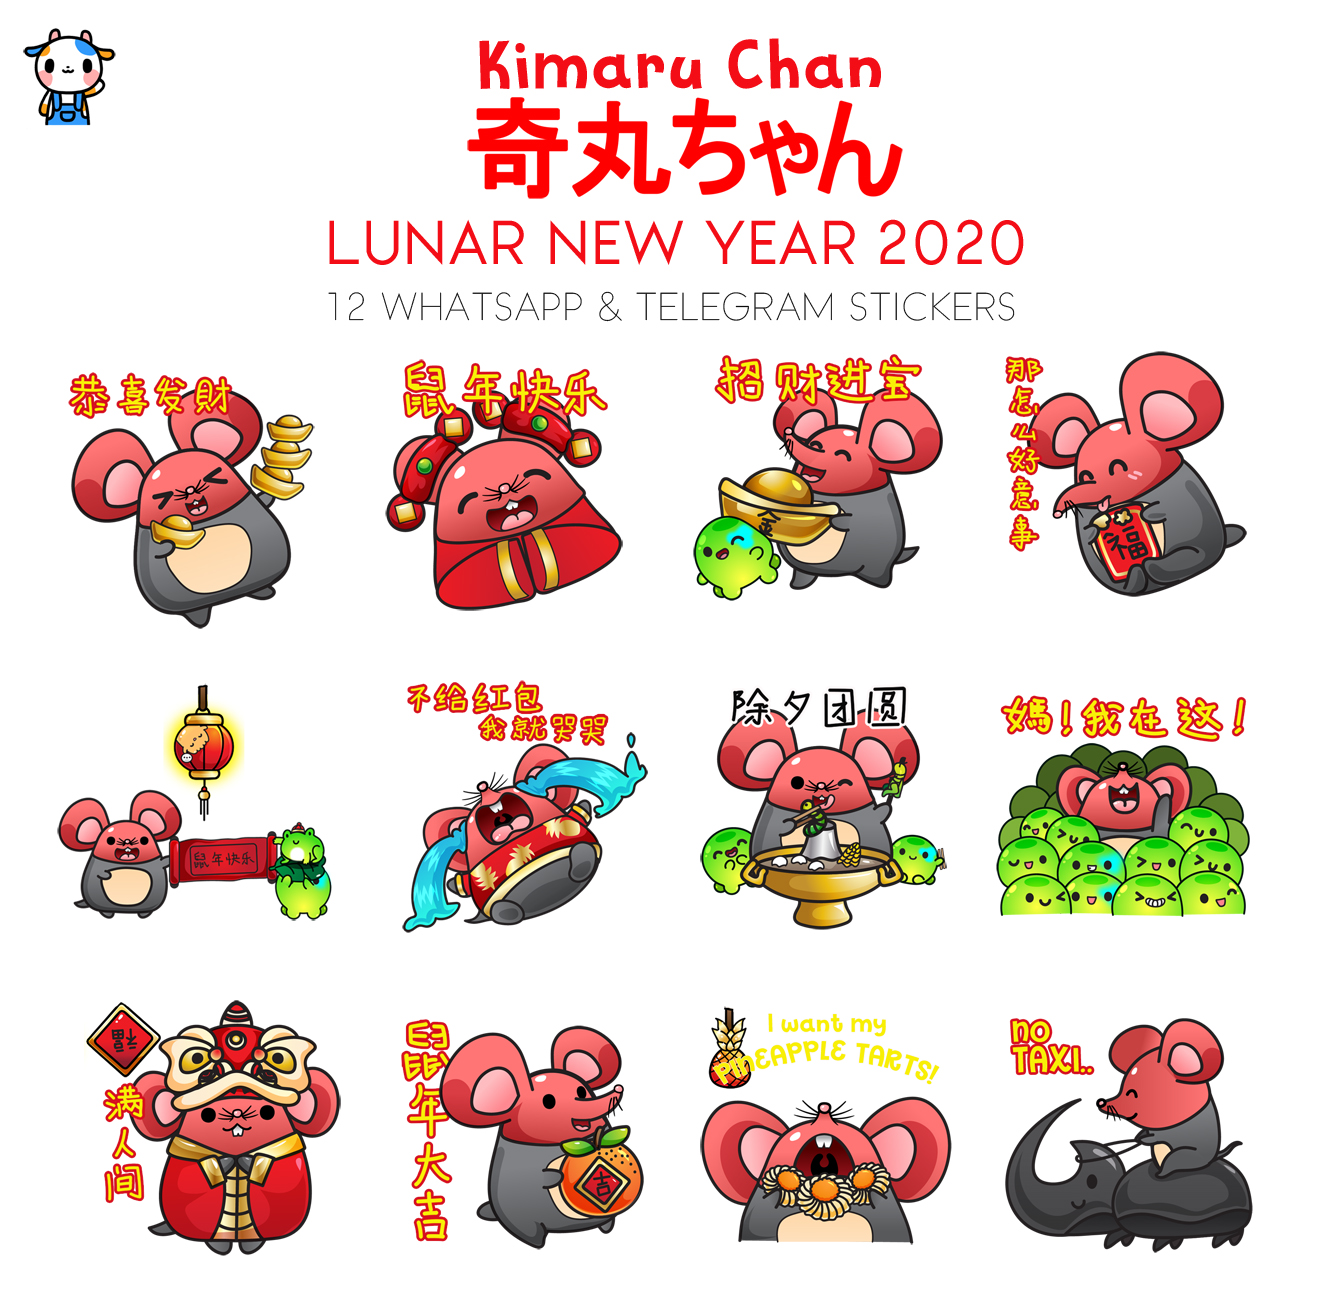 Kimaru Chan Lunar New Year 2020 Whatsapp Telegram Stickers